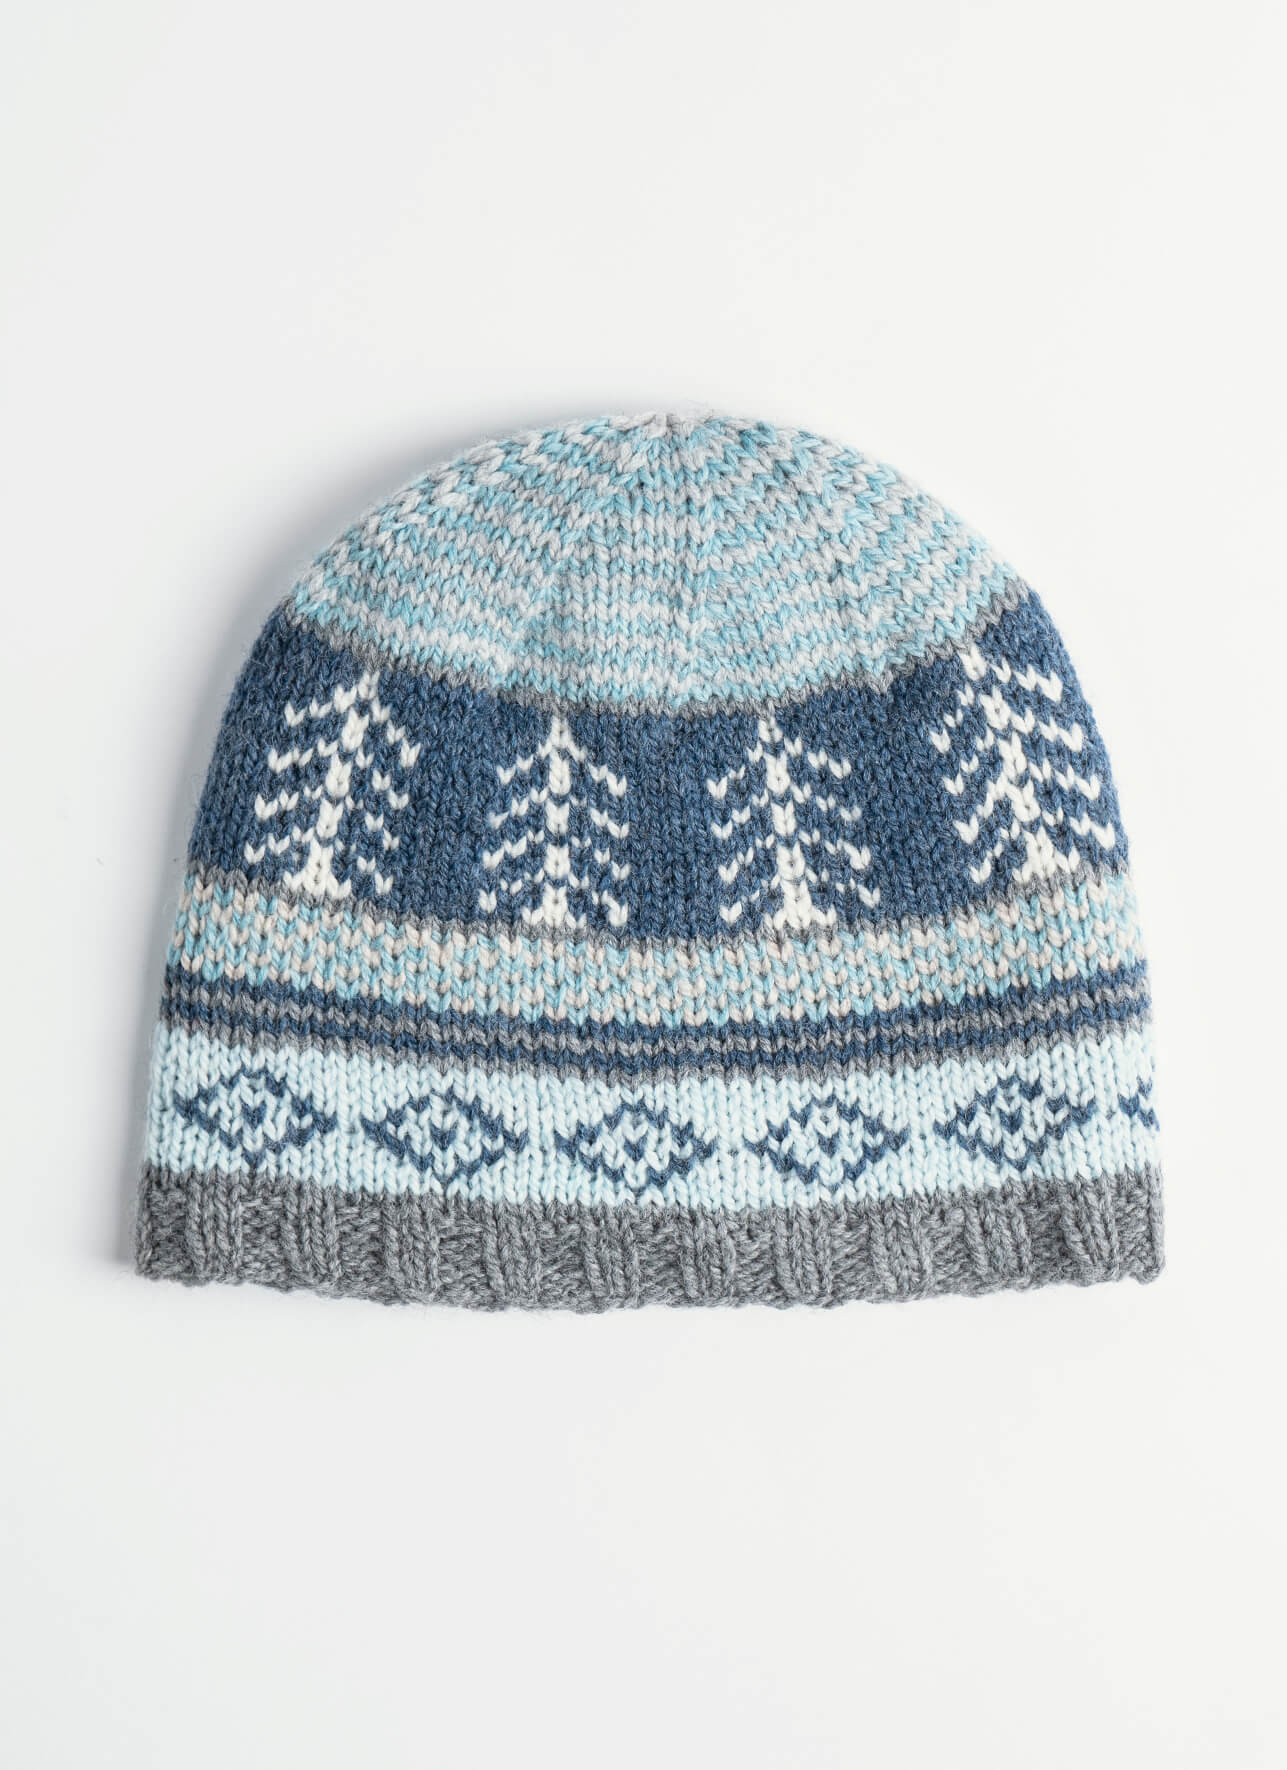 Winter Wonderland Hat Kit